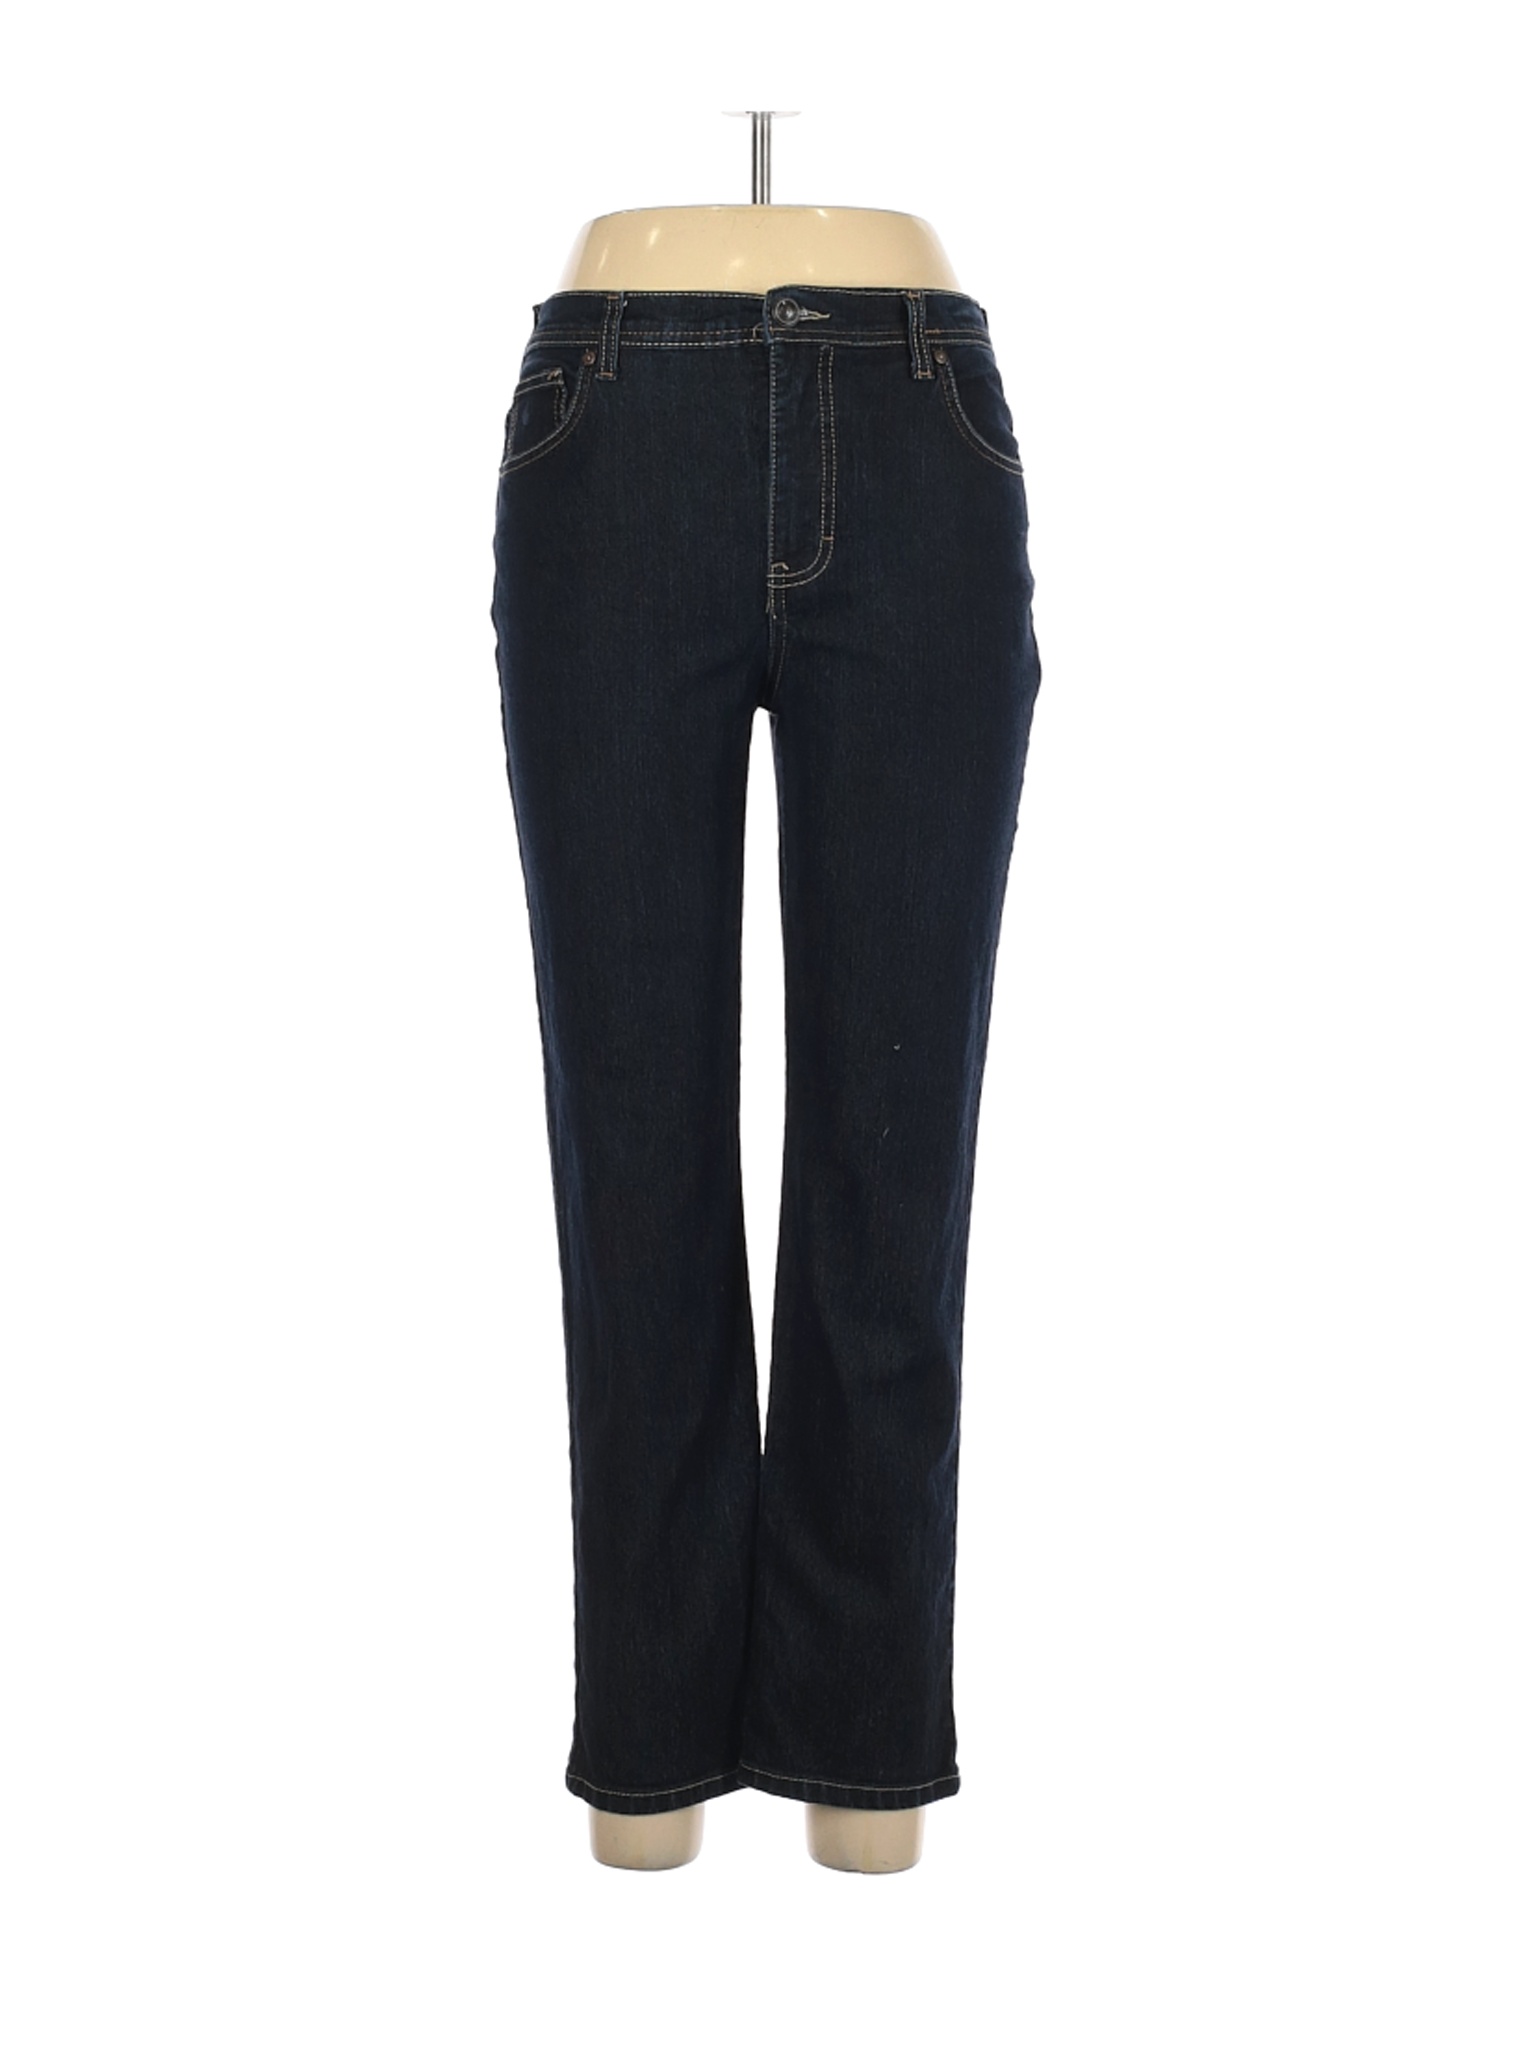 Gloria Vanderbilt Women Black Jeans 10 Petites | eBay